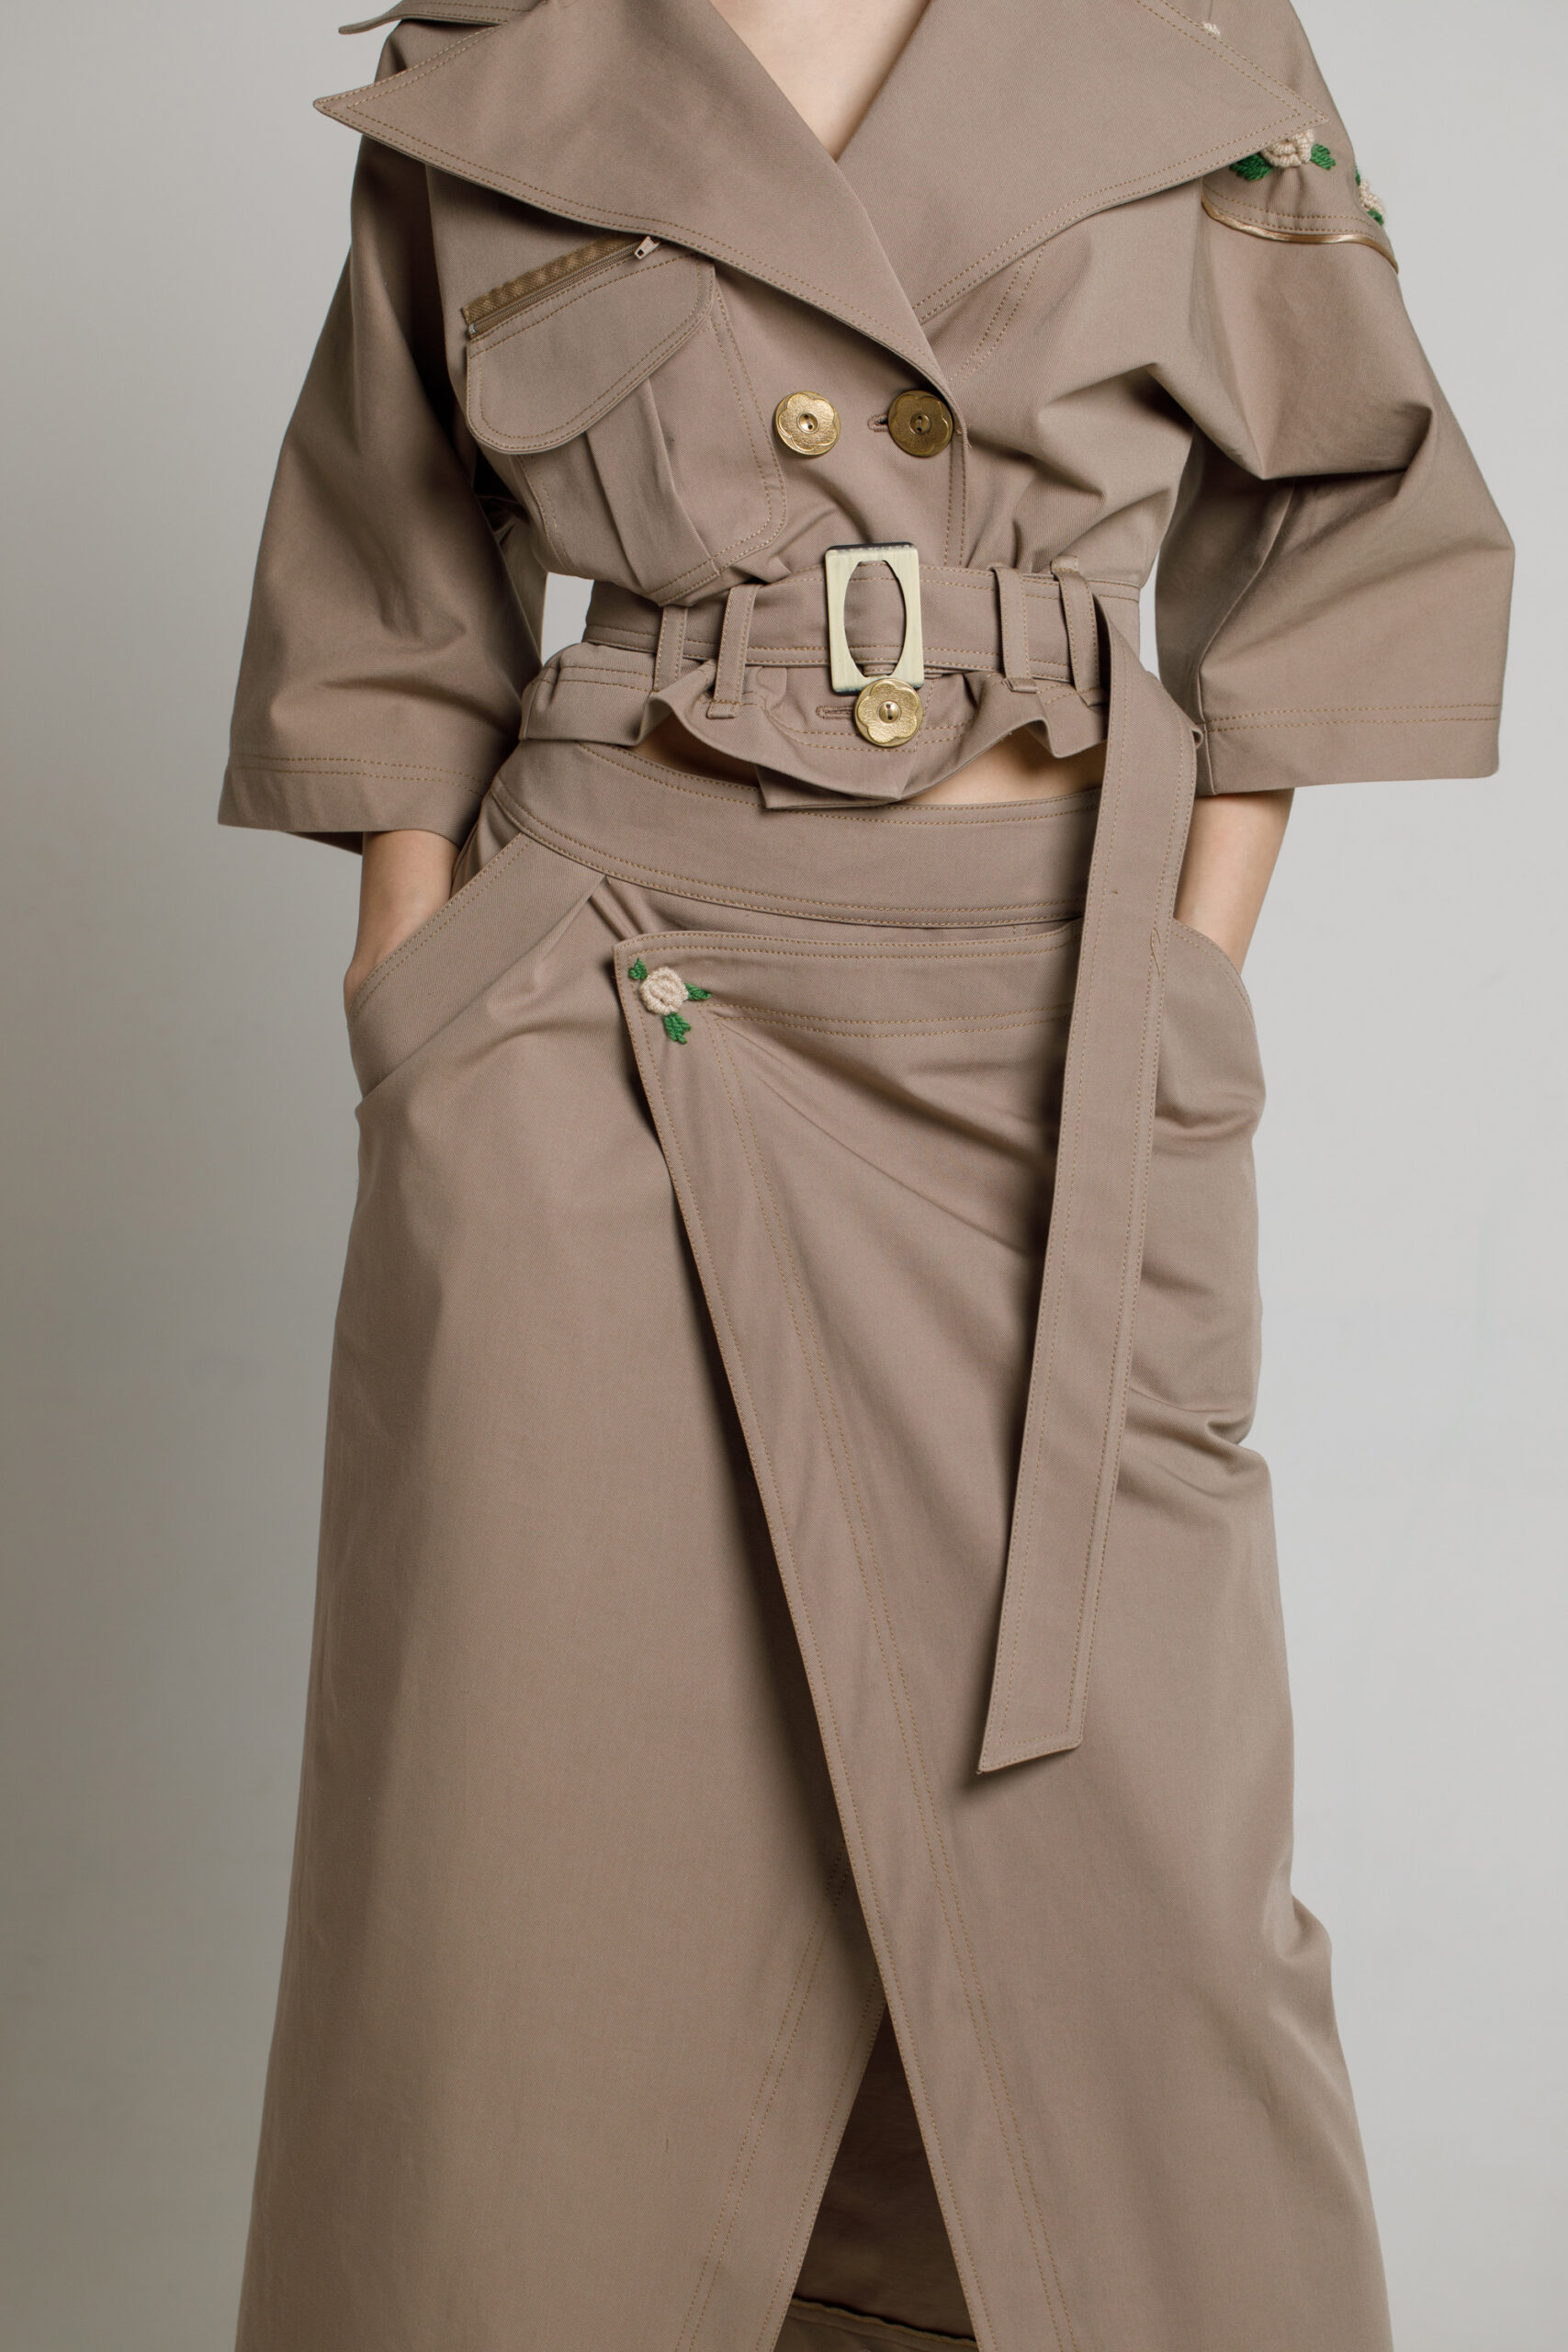 FANNIE casual beige asymmetric skirt. Natural fabrics, original design, handmade embroidery